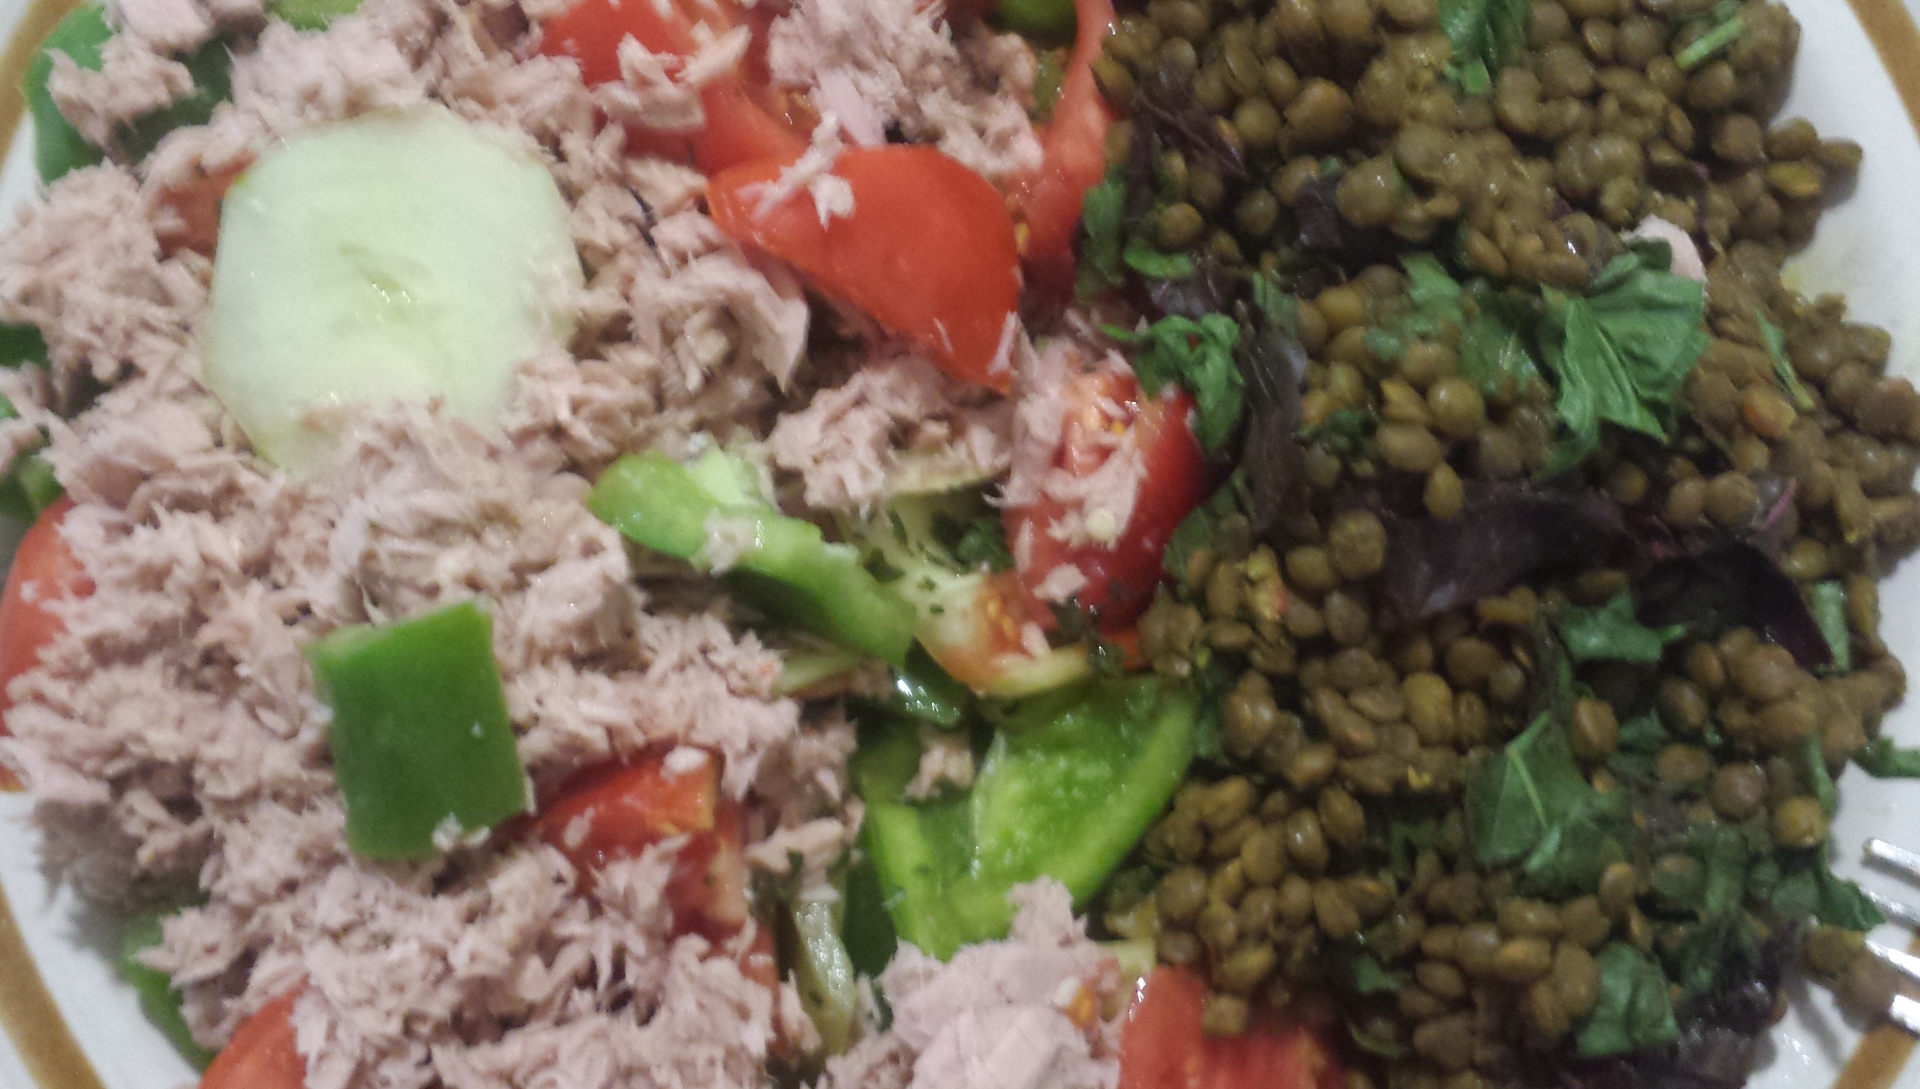 Tuna fresh garden salad and brown lentils dinner